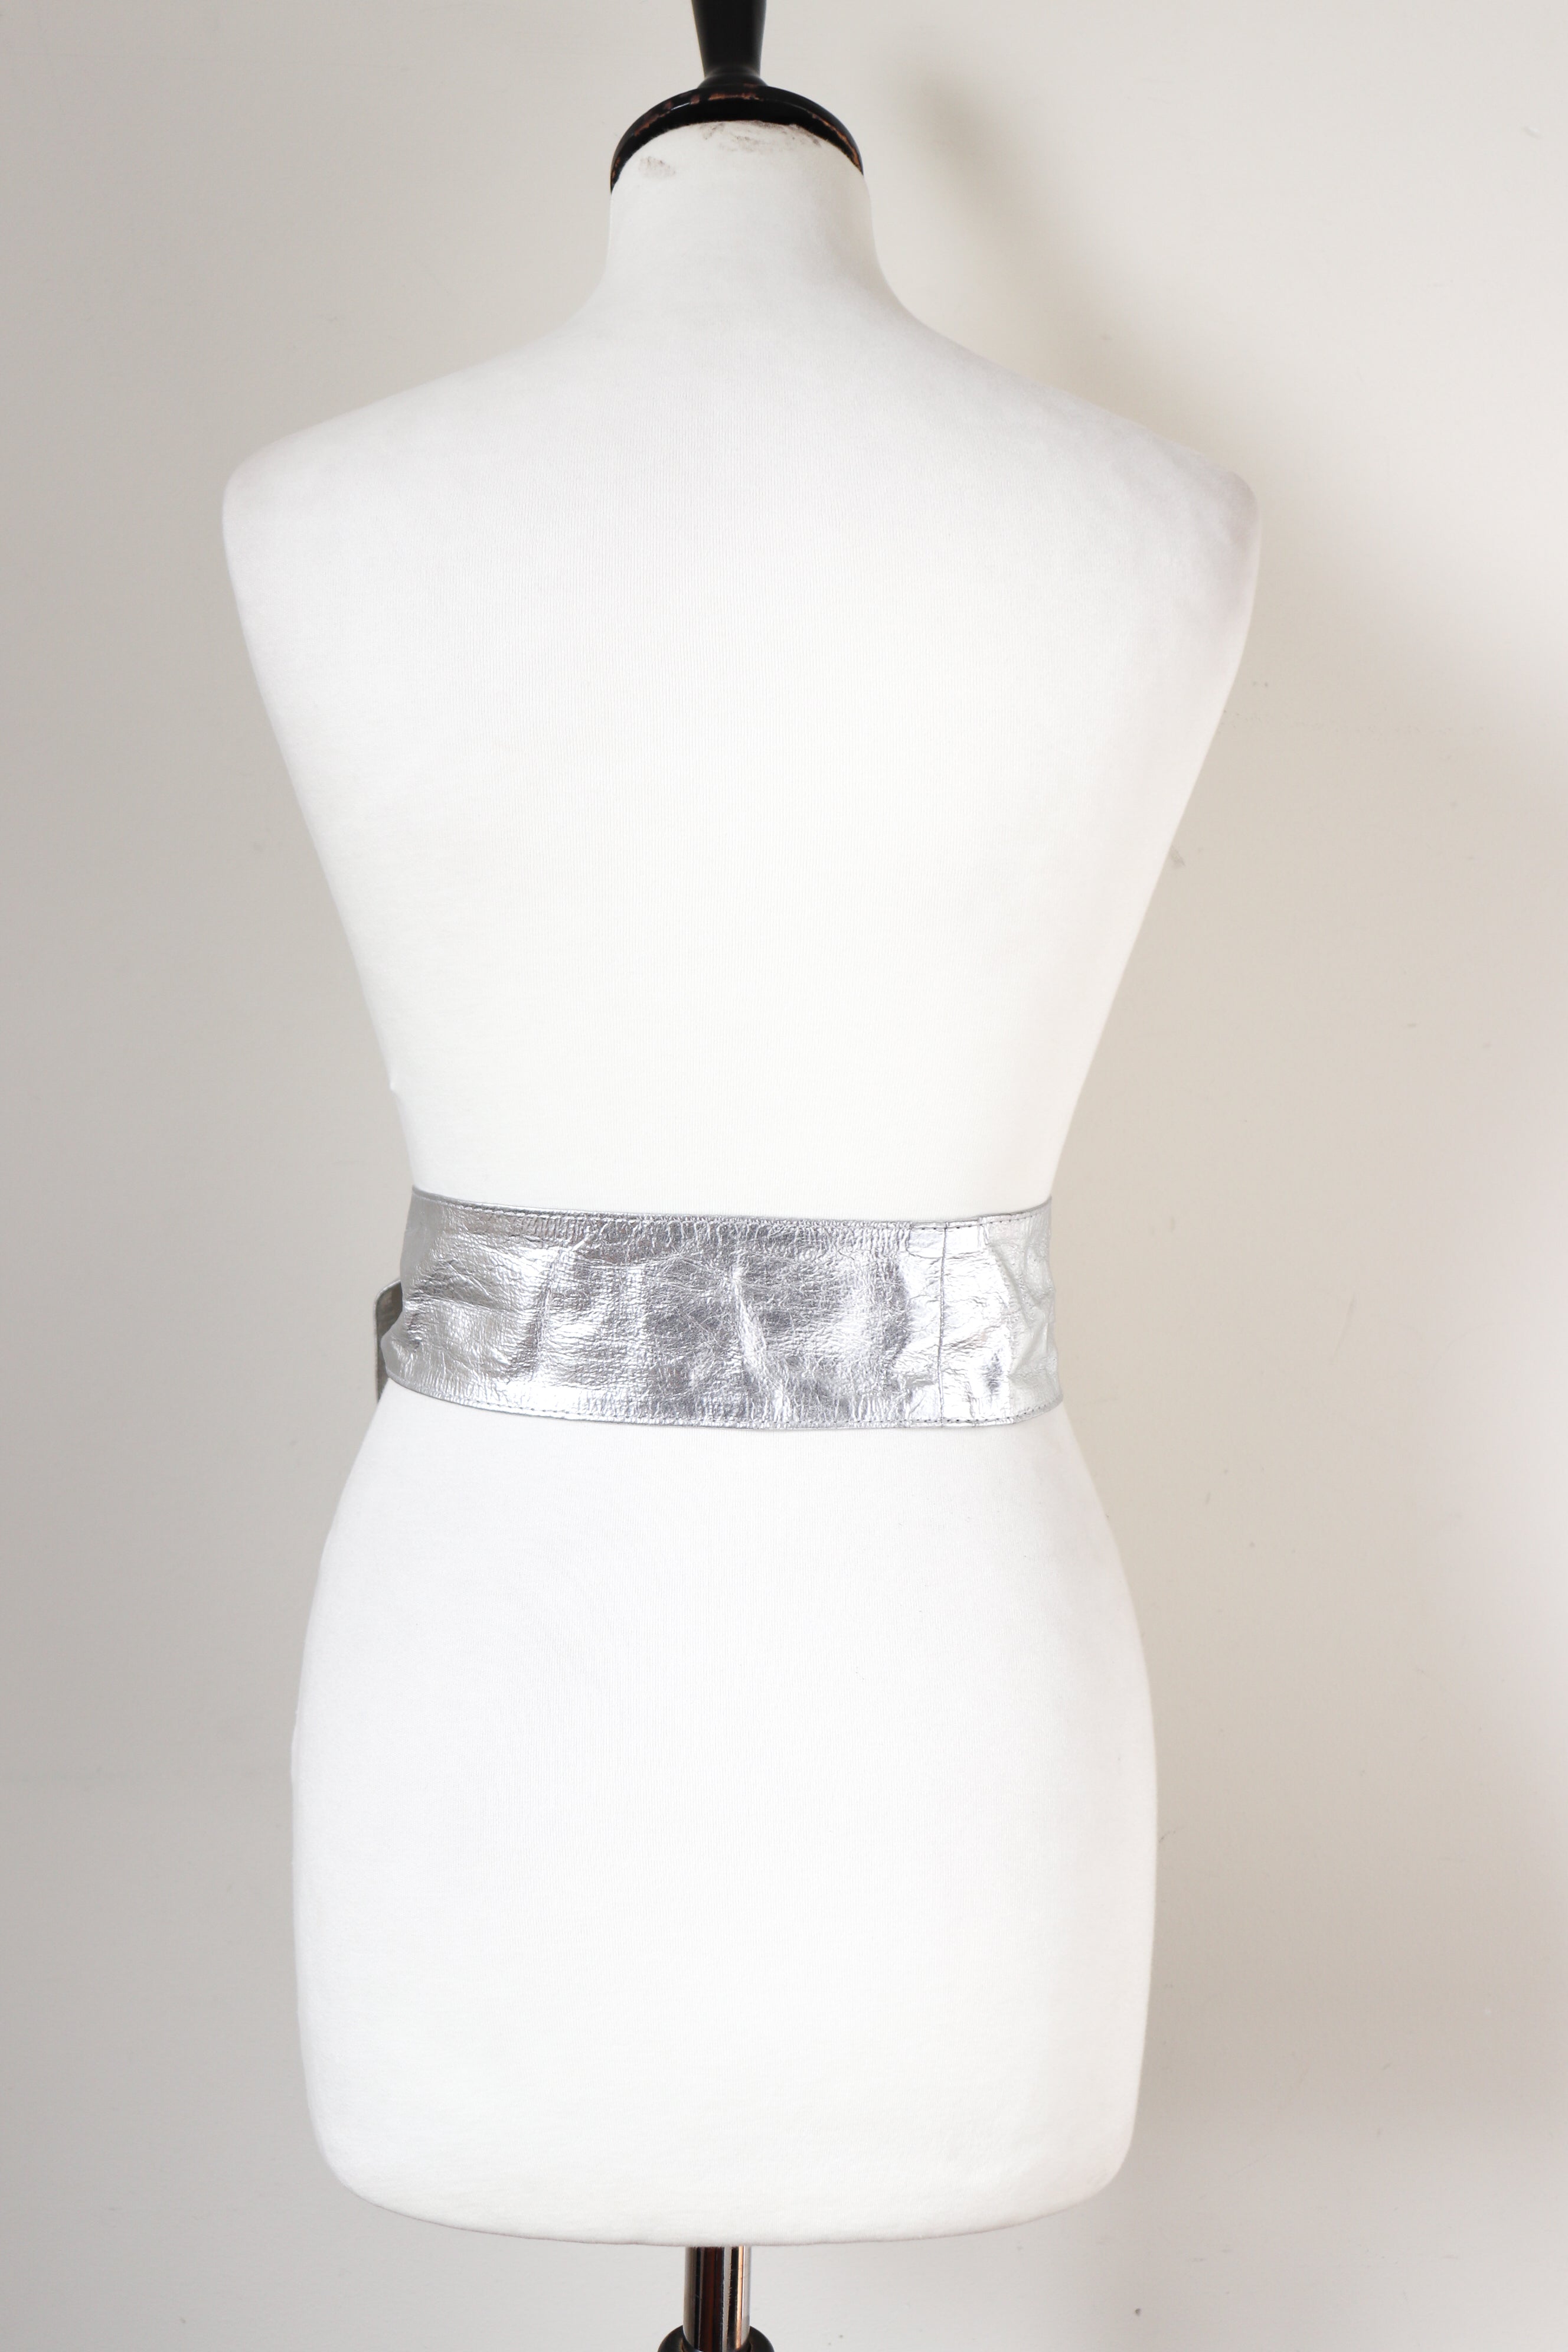 Vintage Silver Leather Belt Tie - 1980s - M / L